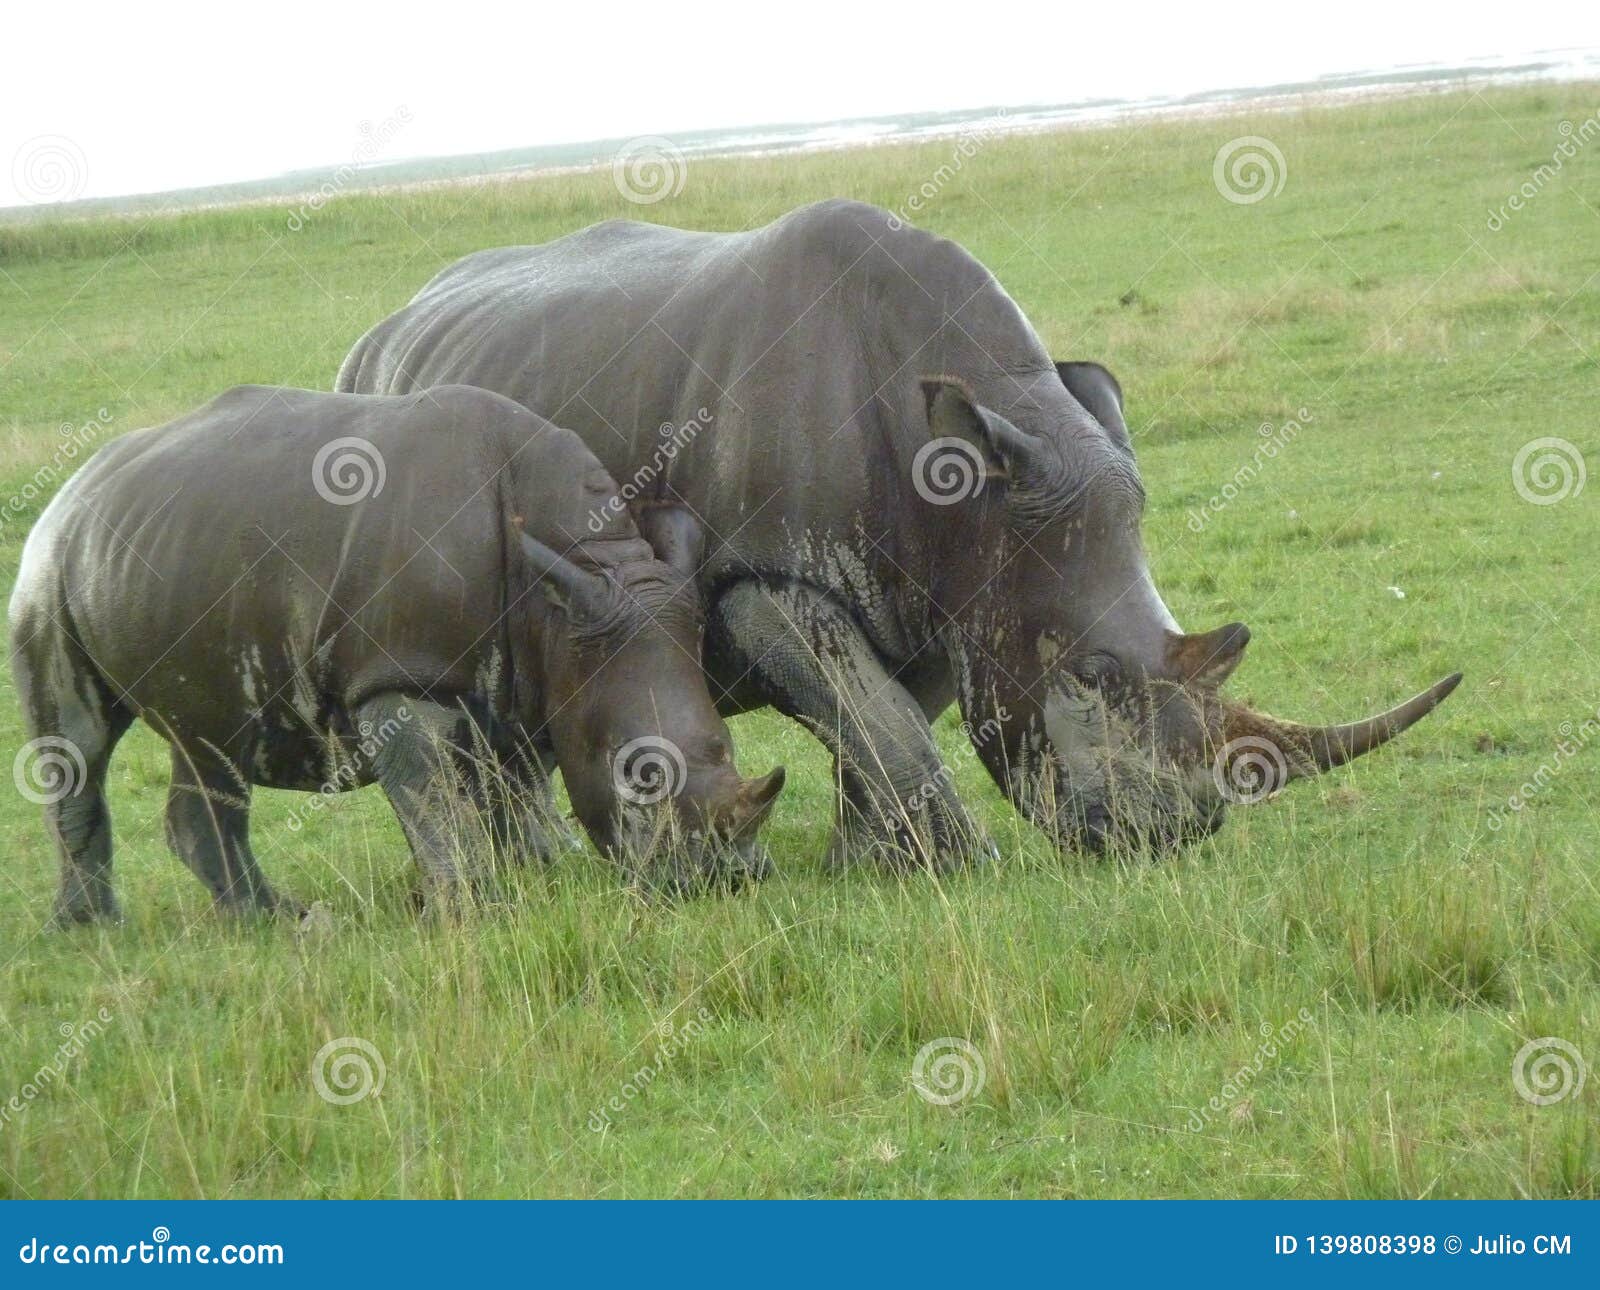 a close up of a female rhino / rhinoceros and her calf